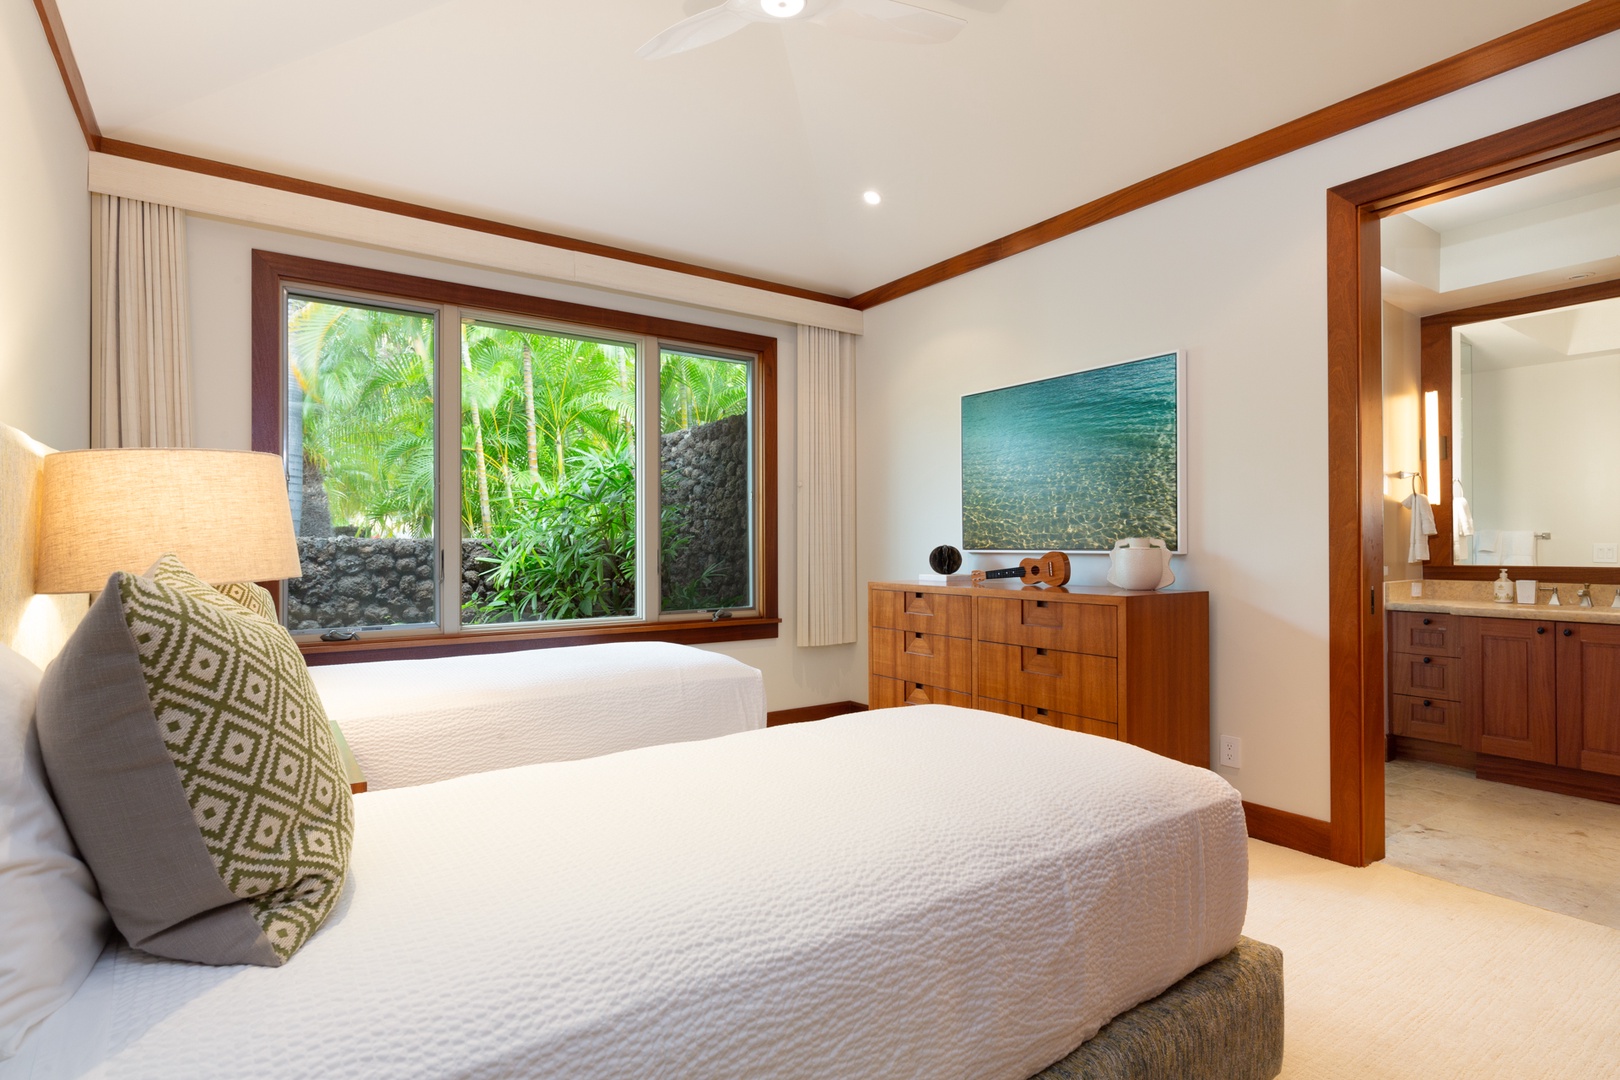 Kailua Kona Vacation Rentals, 4BD Hainoa Estate (102) at Four Seasons Resort at Hualalai - Alternate view leading into the en suite bath